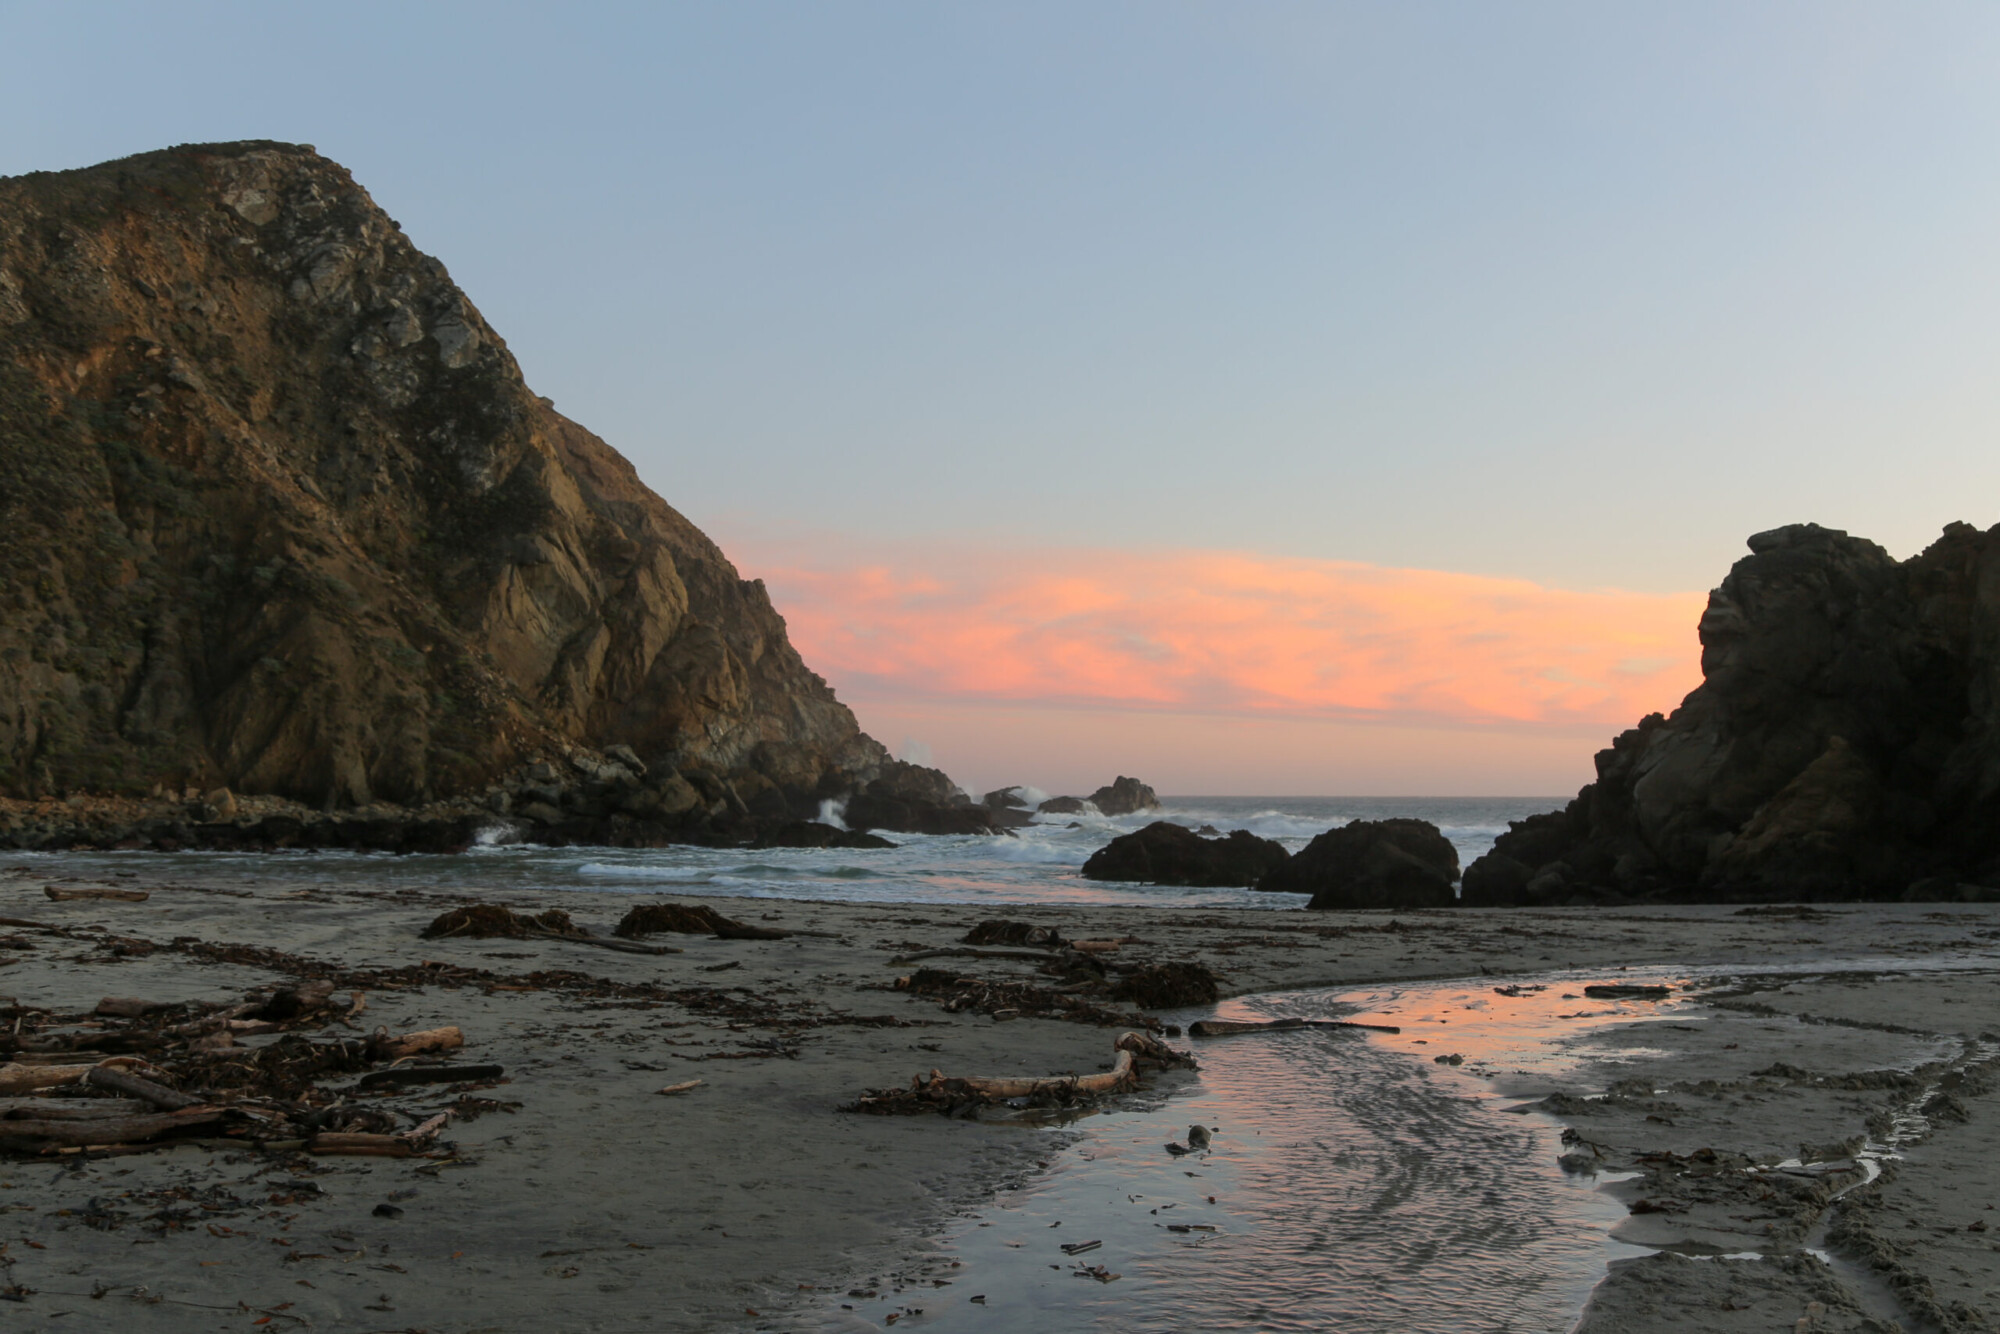 Sunset view of Pfeiffer Beach in Big Sur, California